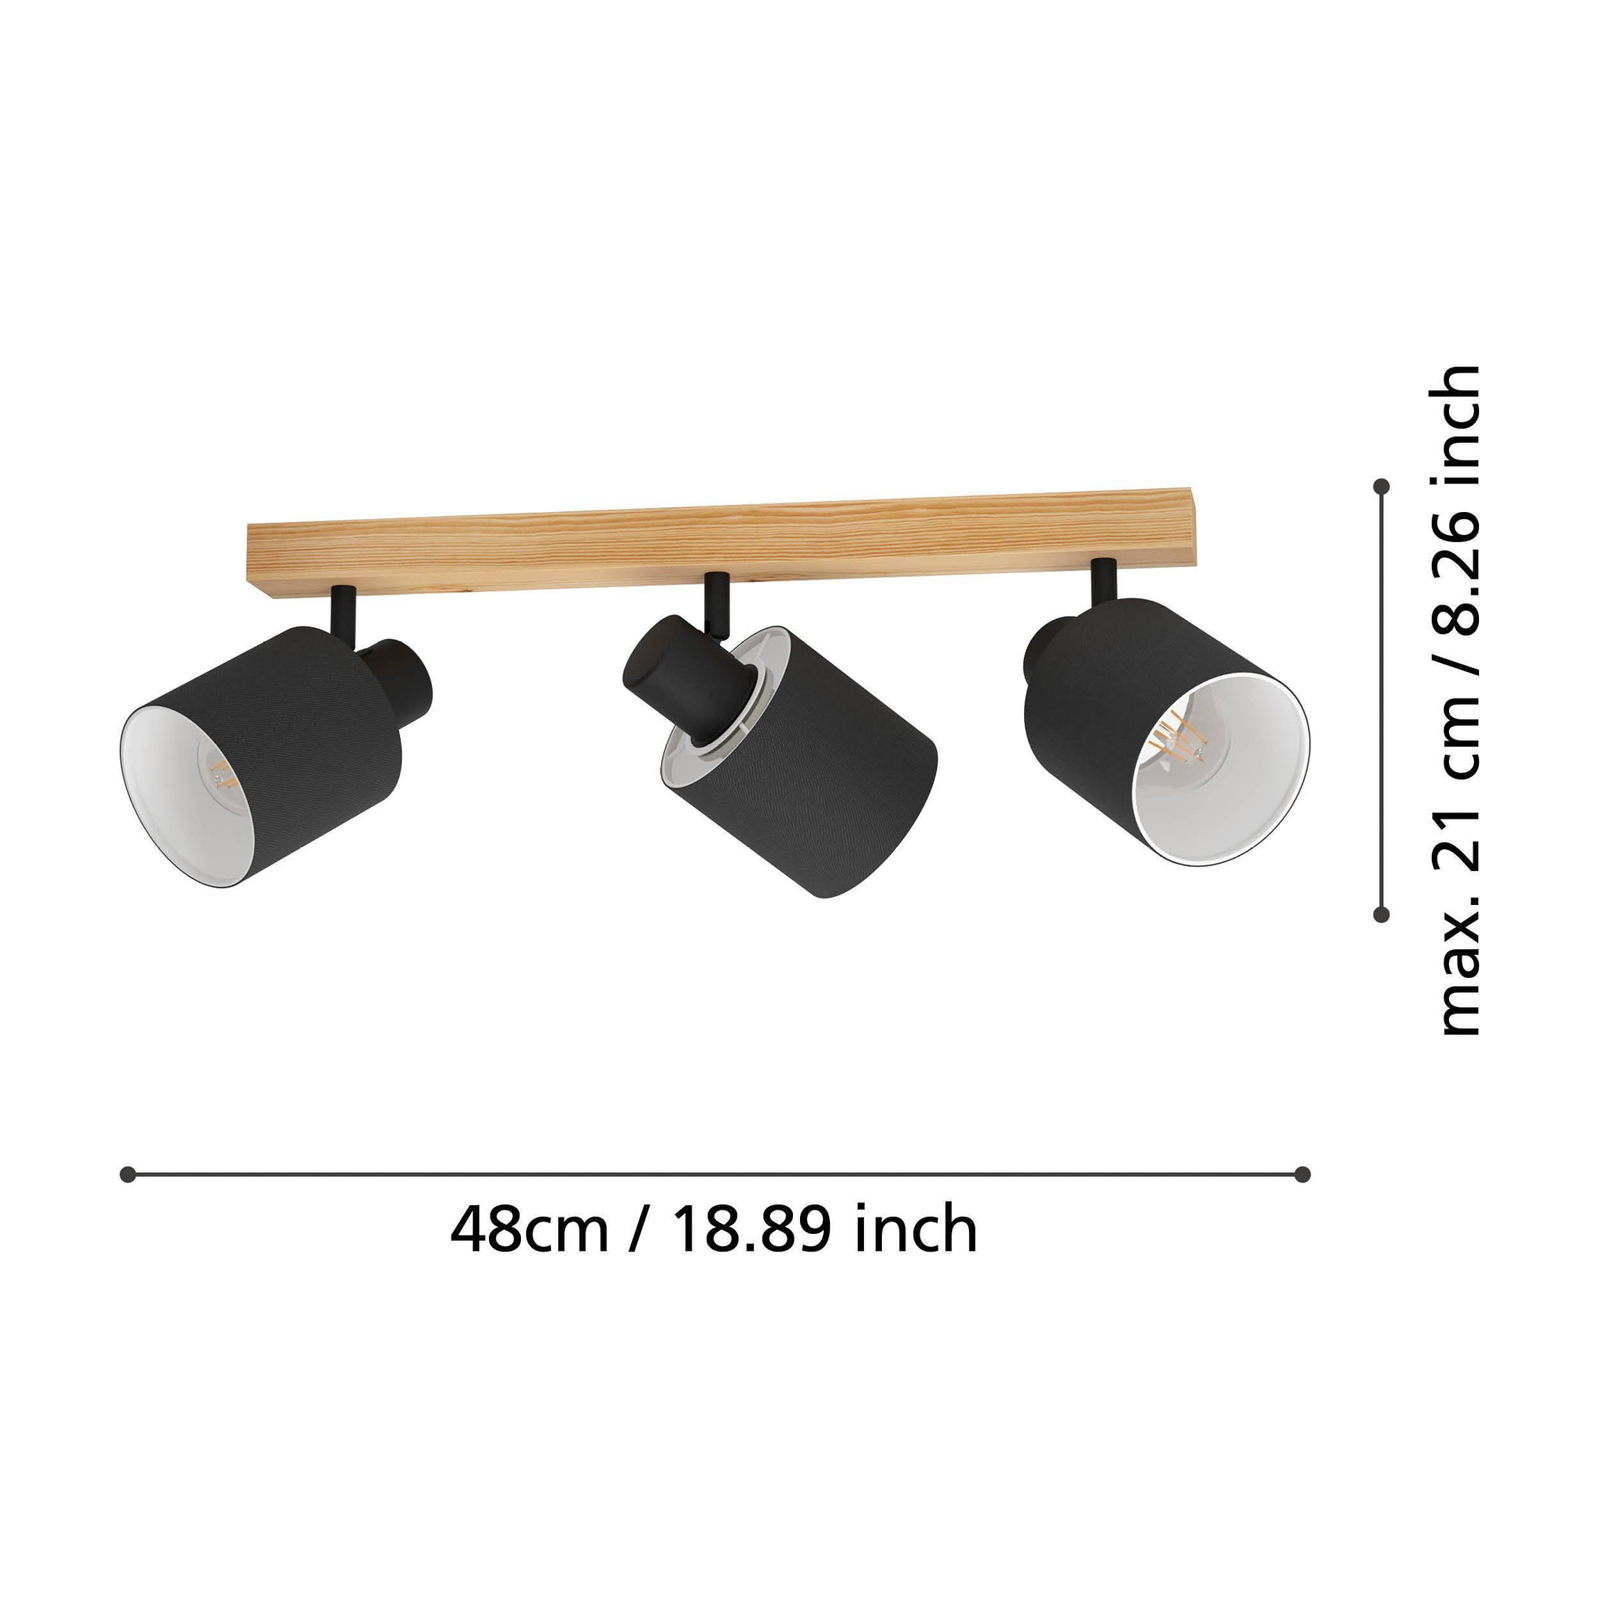 Batallas downlight, length 48 cm, black/wood, 3-bulb.